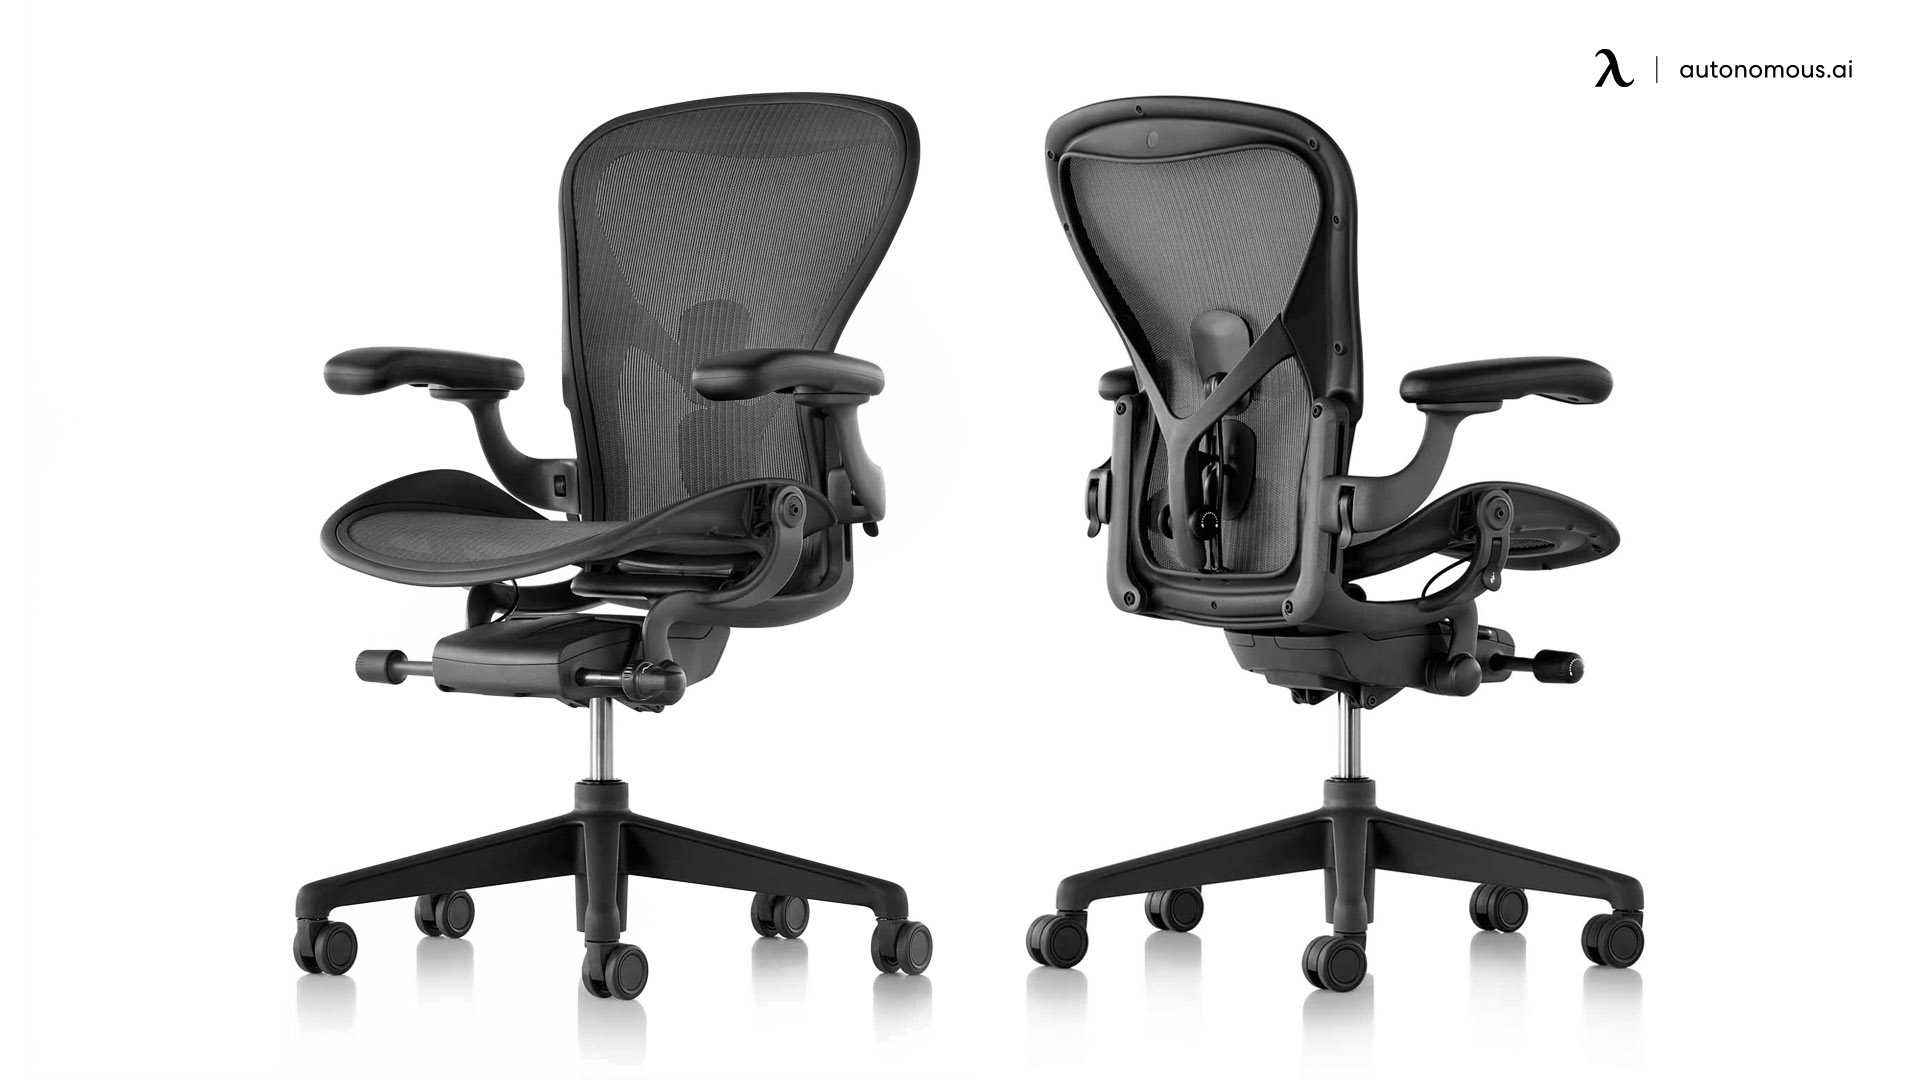 Best Ergonomic Office Chair In The Uk, Ergonomic Office Chair Uk Reviews